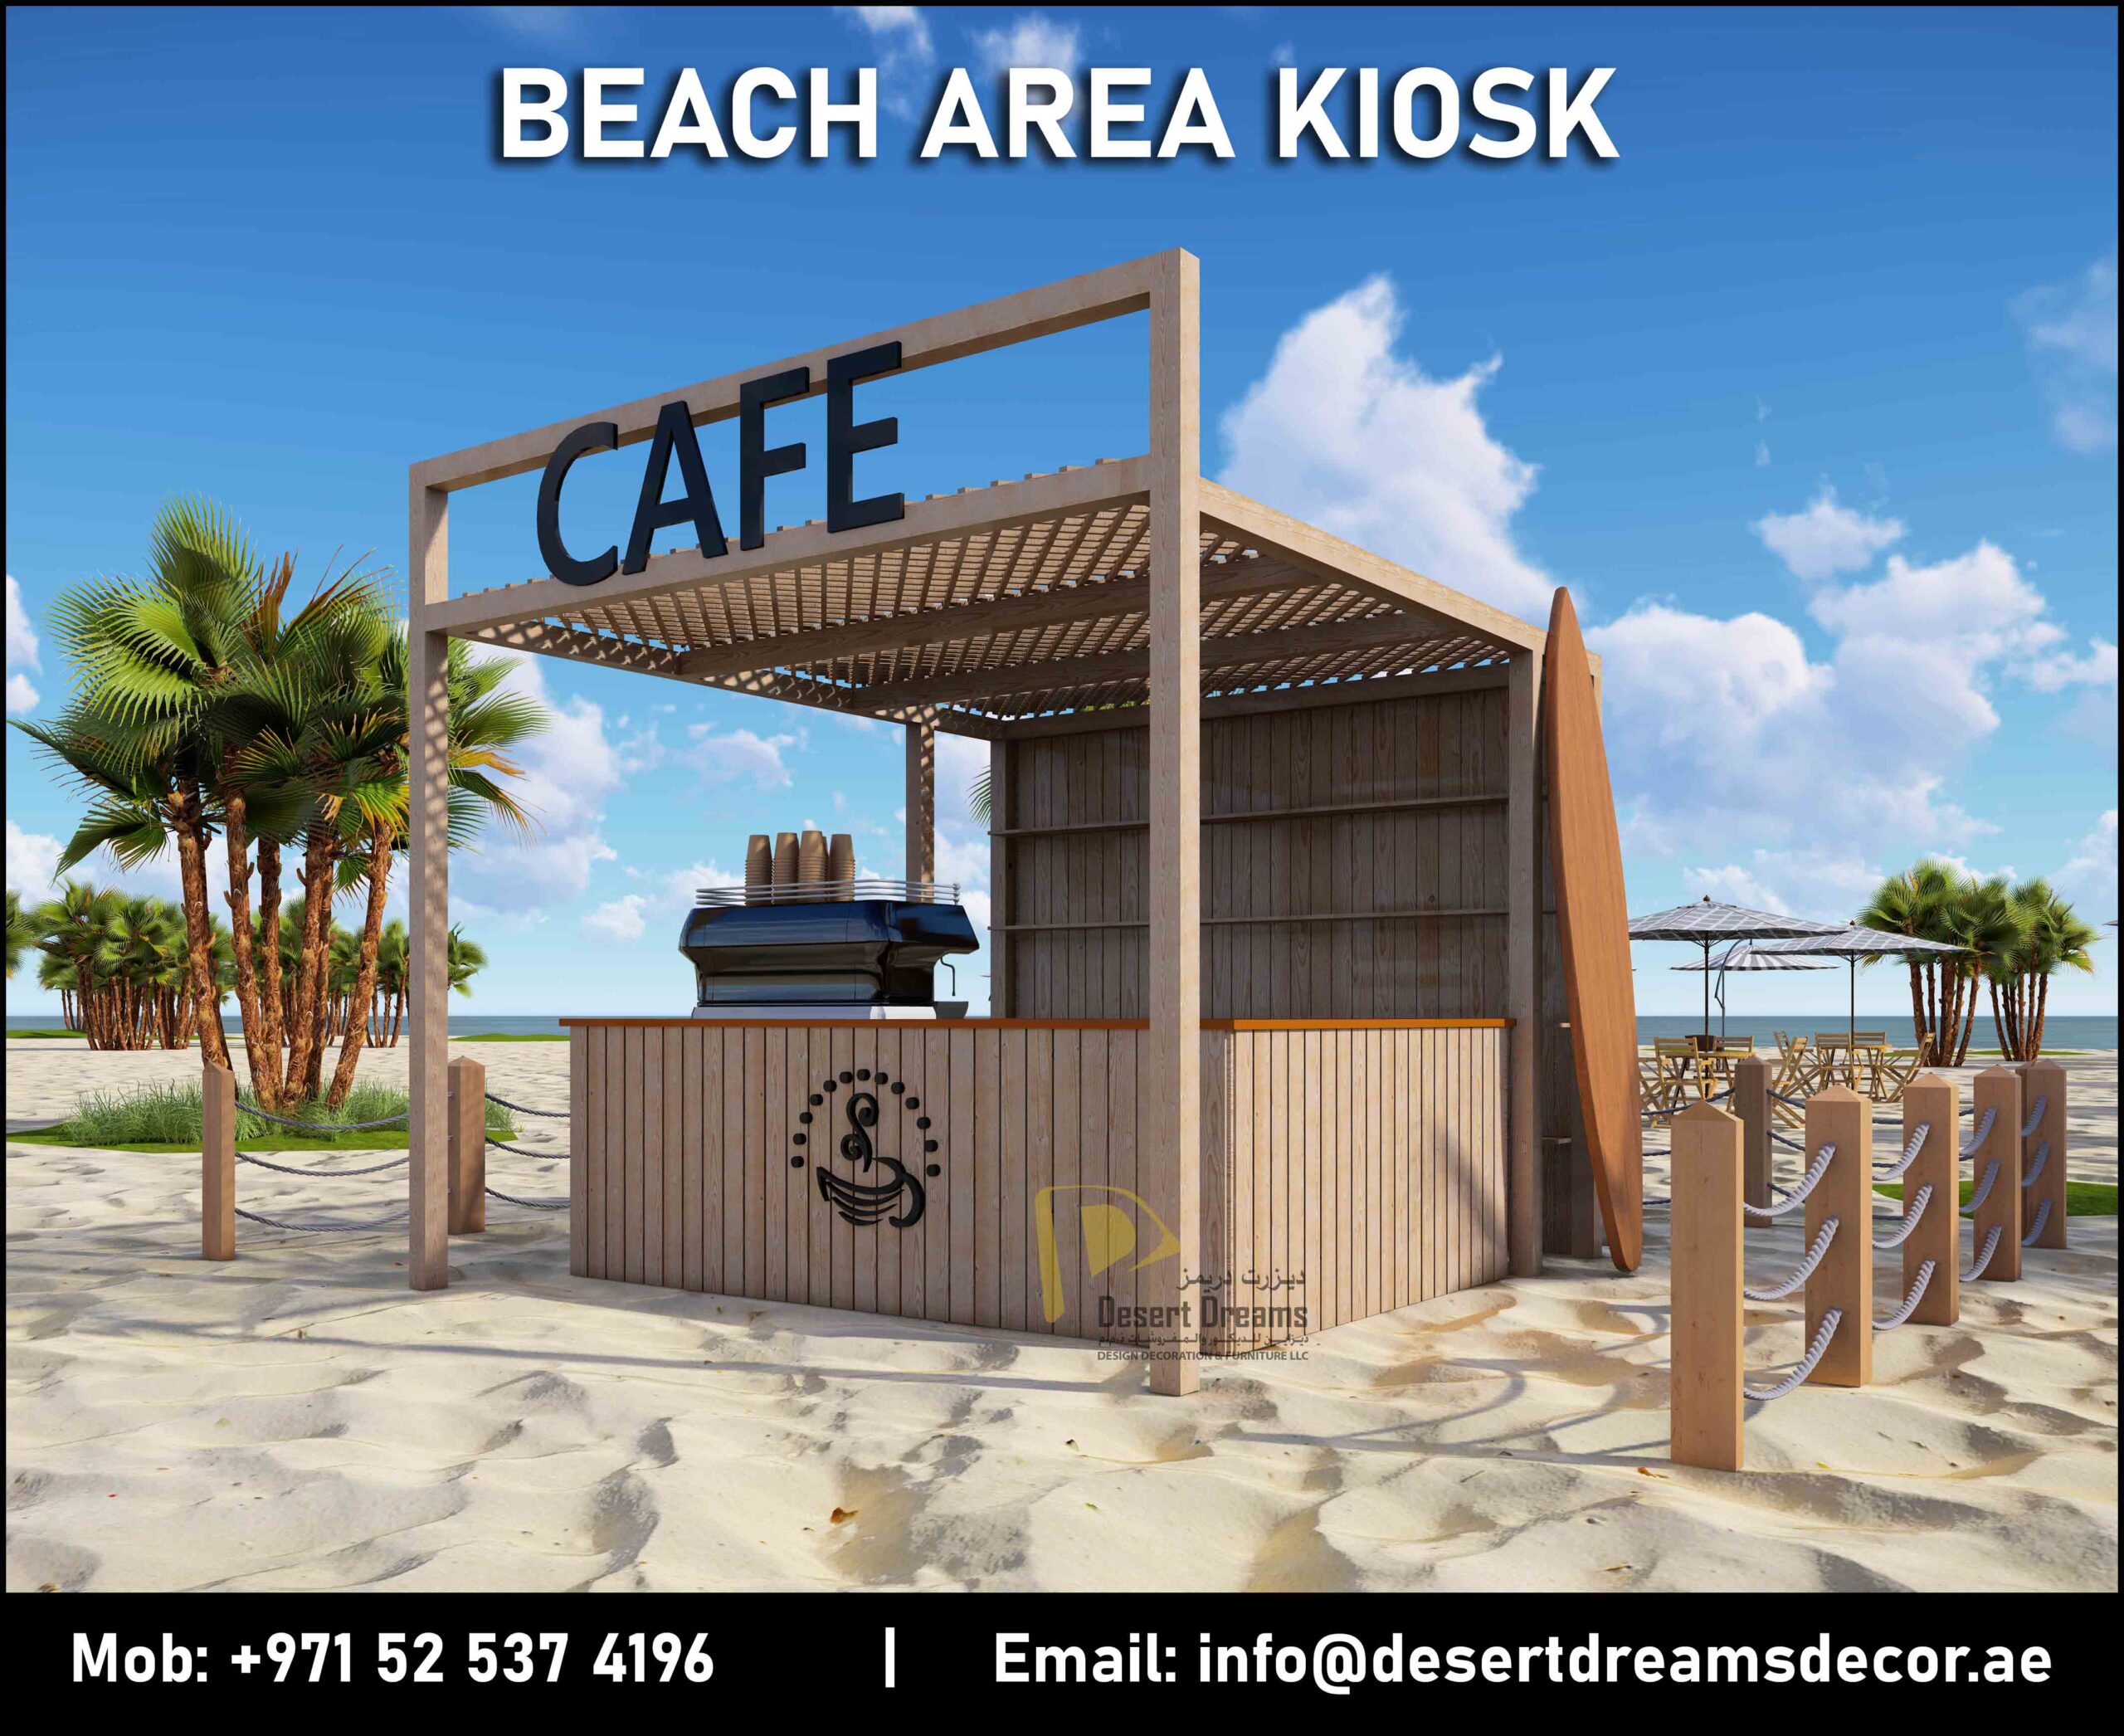 Coffee Cafe Kiosk in Uae | Rental Kiosk Dubai | Beach Kiosk Uae.